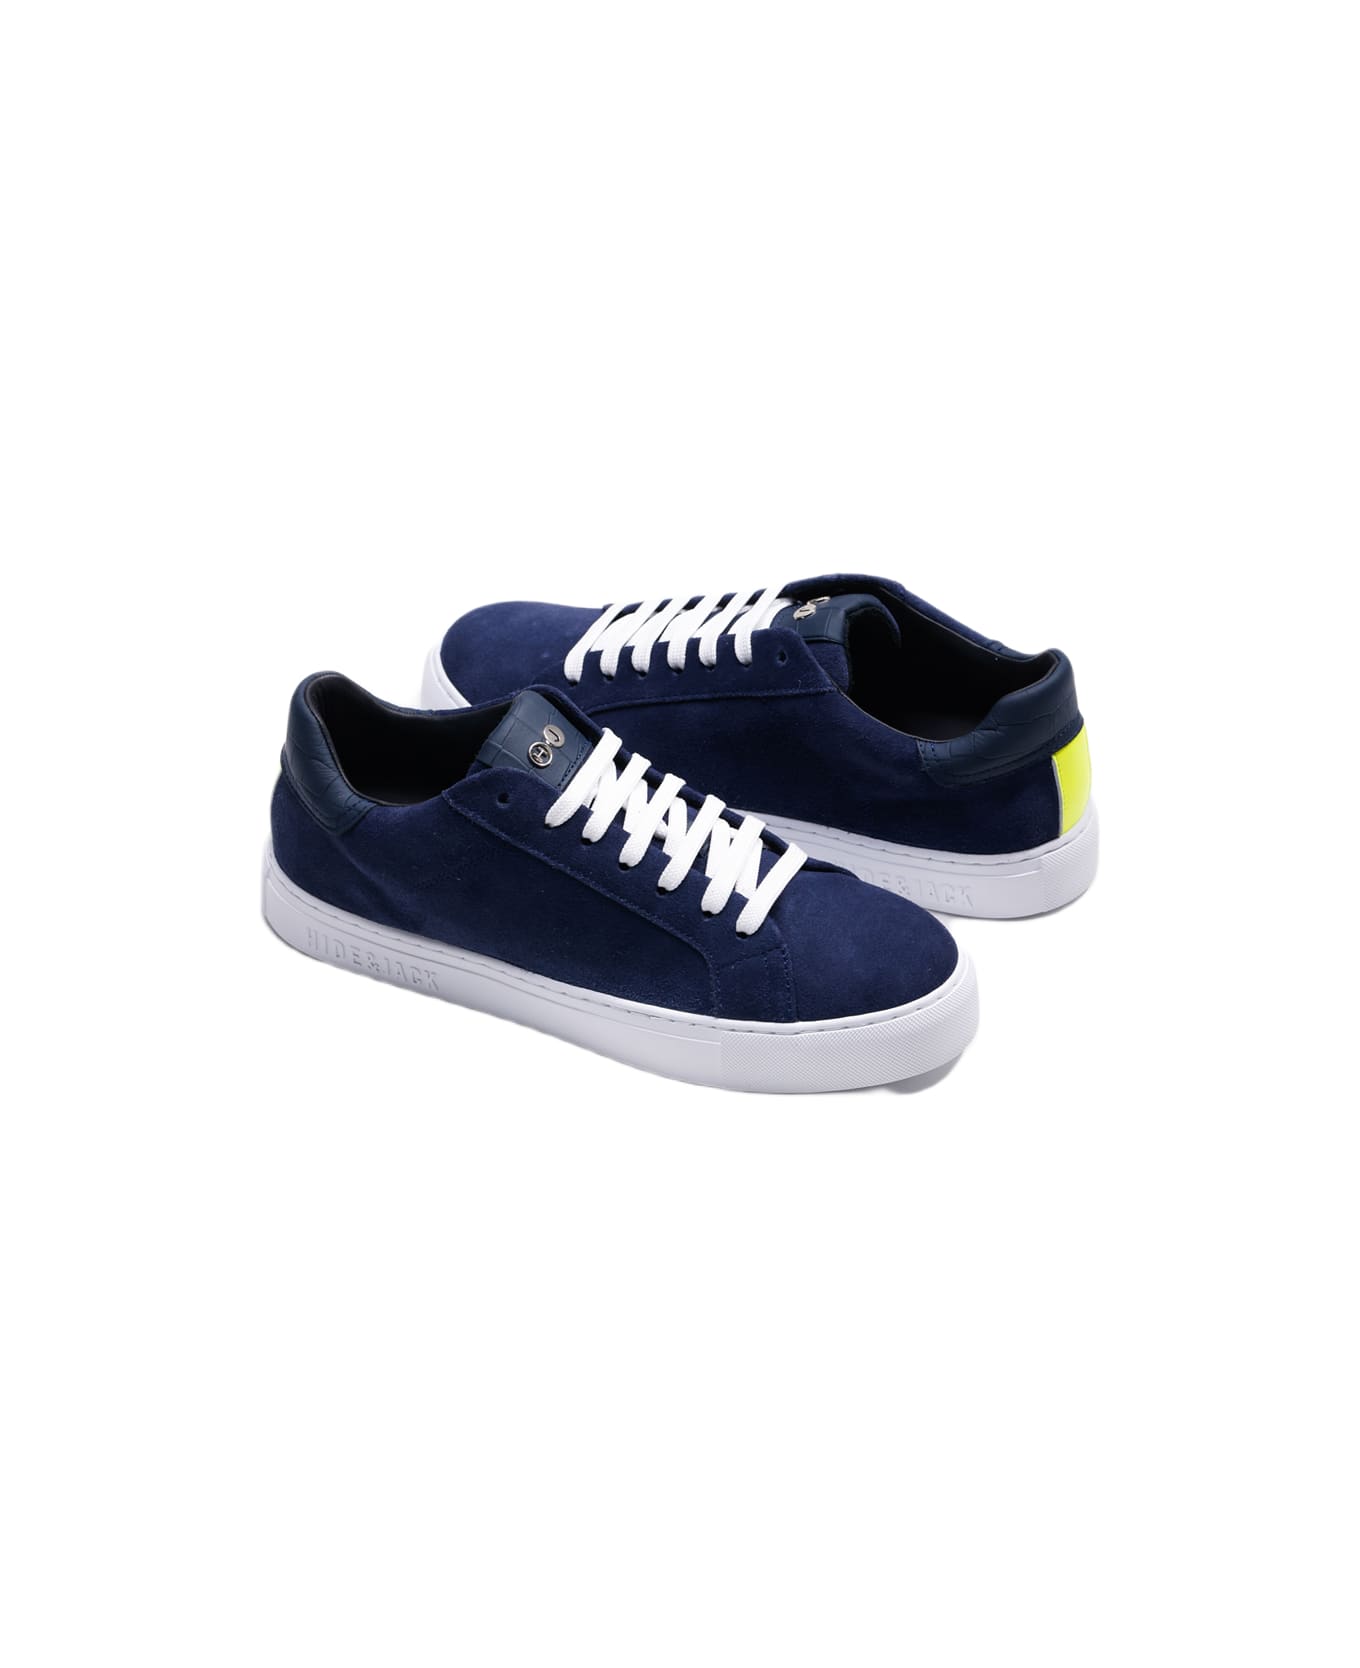 Hide&Jack Low Top Sneaker - Essence Oil Blue White スニーカー